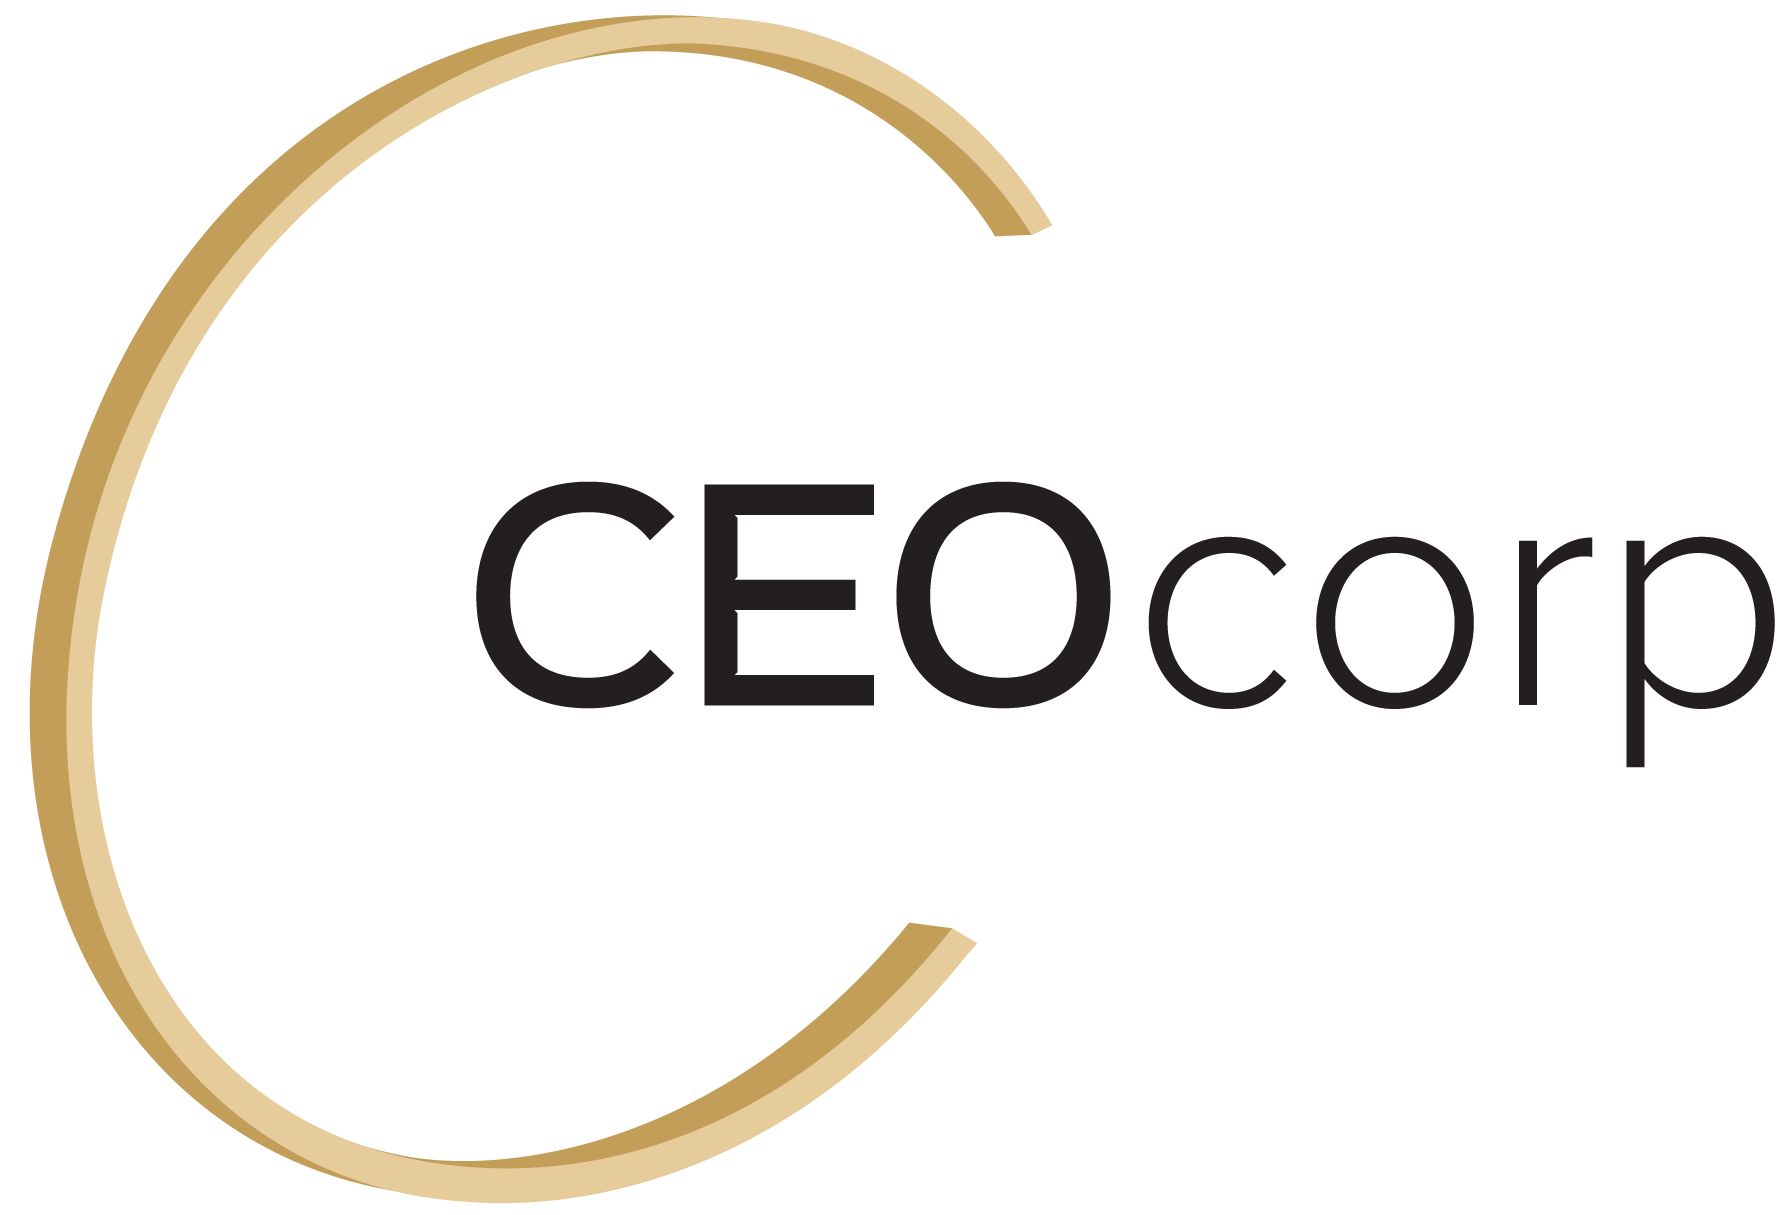 Ceocorp